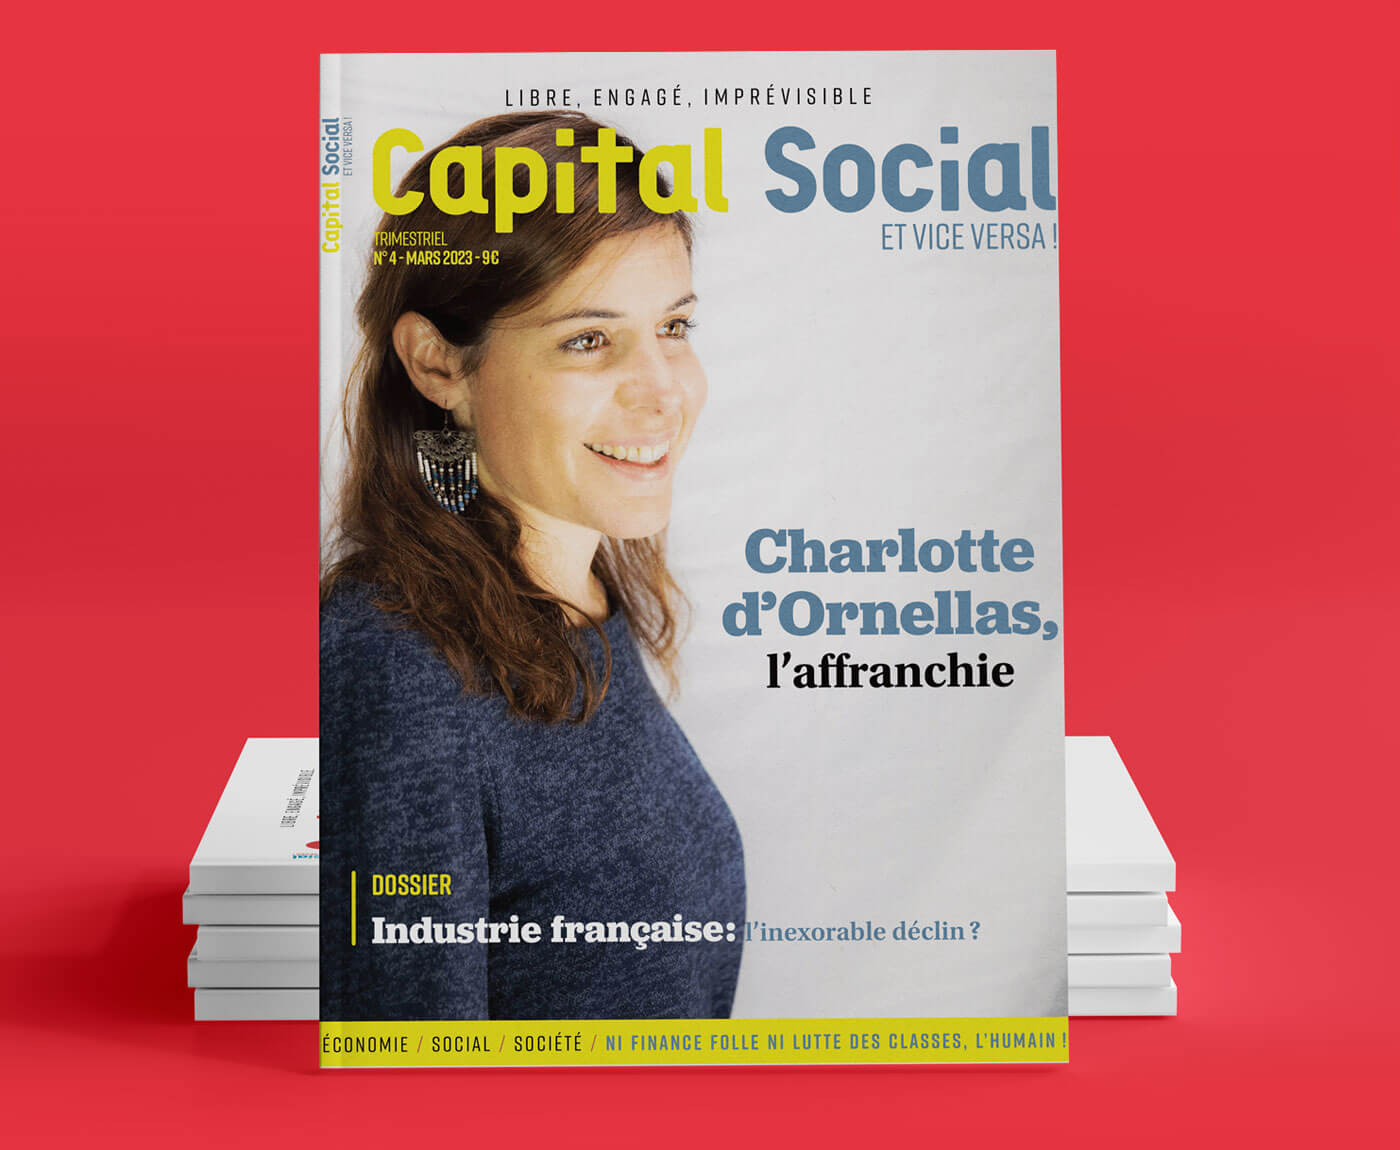 Capital Social n°4 : Charlotte d'Ornellas l'affranchie